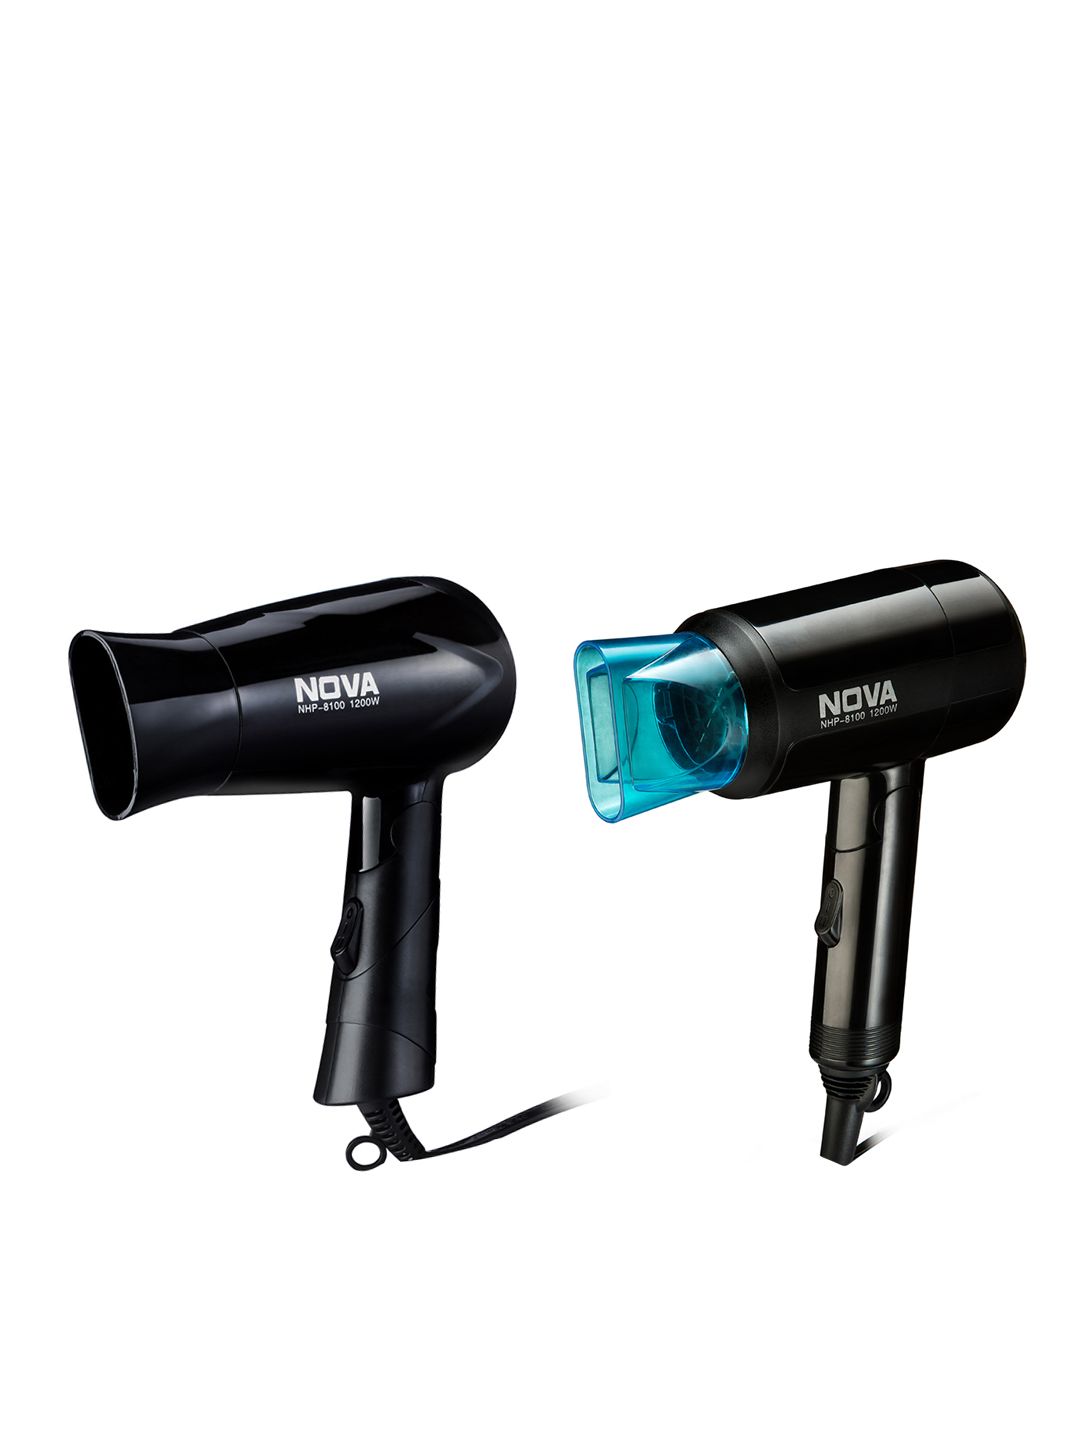 NOVA Silky Shine Hot & Cold Foldable Hair Dryer NHP 8105 & NHP 8100 - Black & Blue Price in India